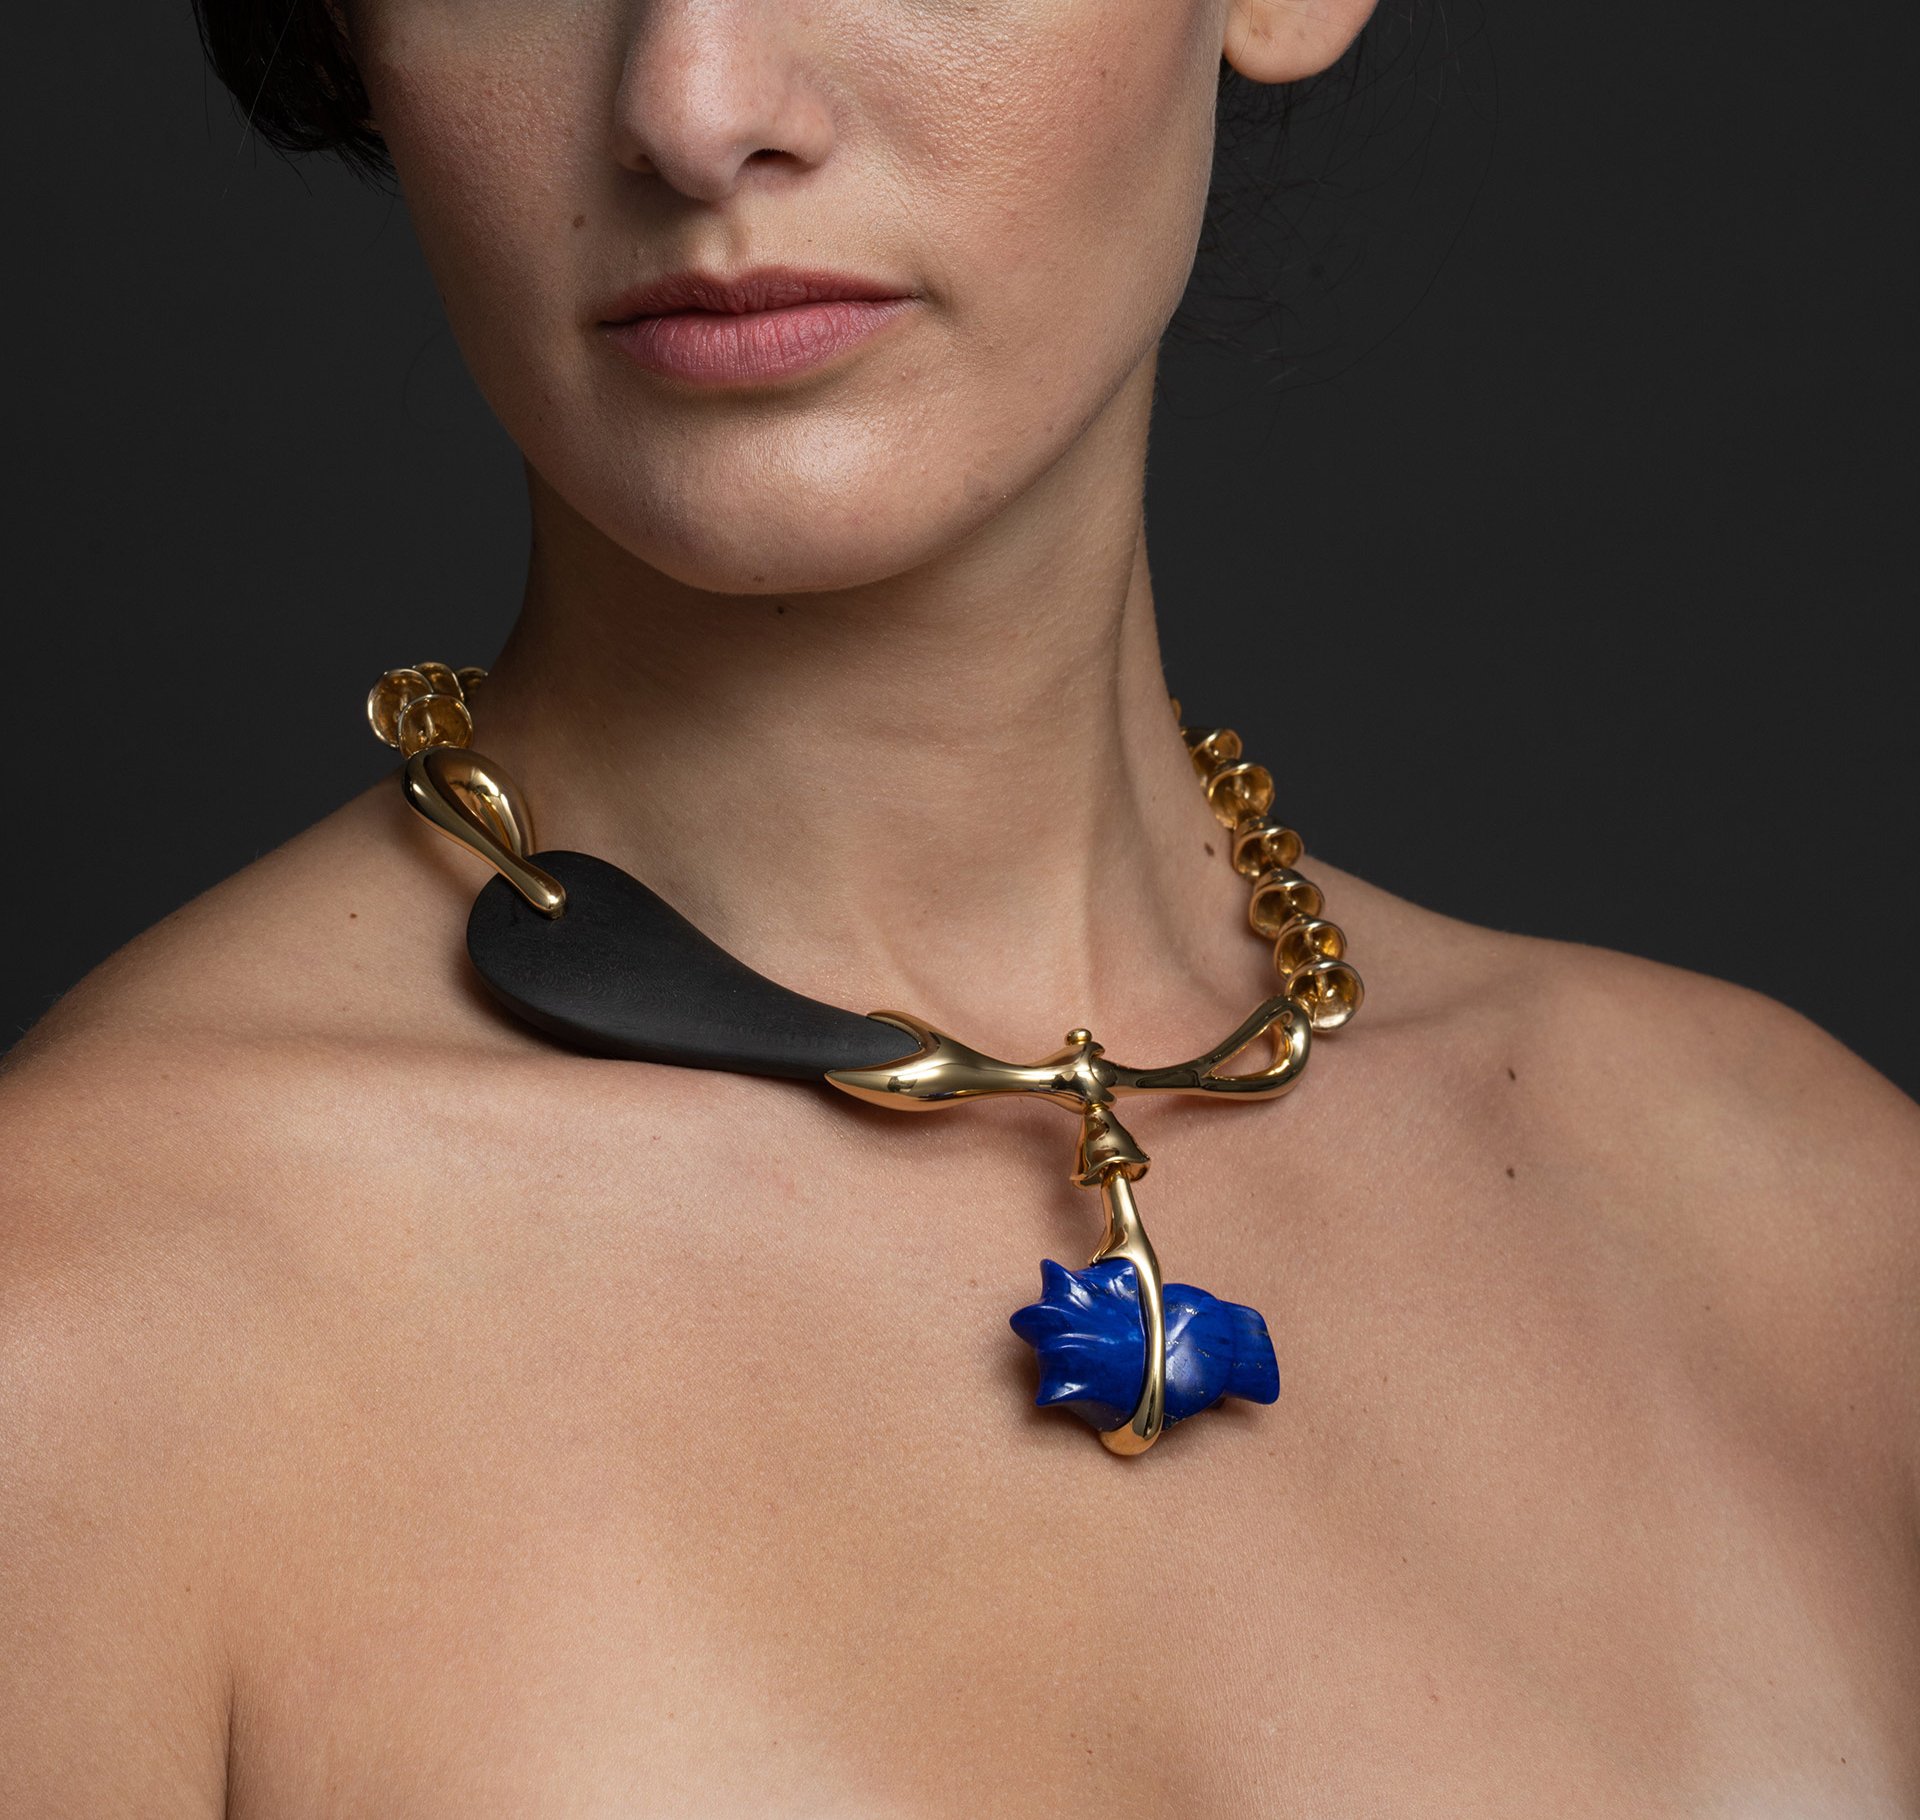 HACHA-egypt-necklaces-collection-julio-martinez-barnetche-marion-friedmann-gallery-LR-egypt263-cut.jpg